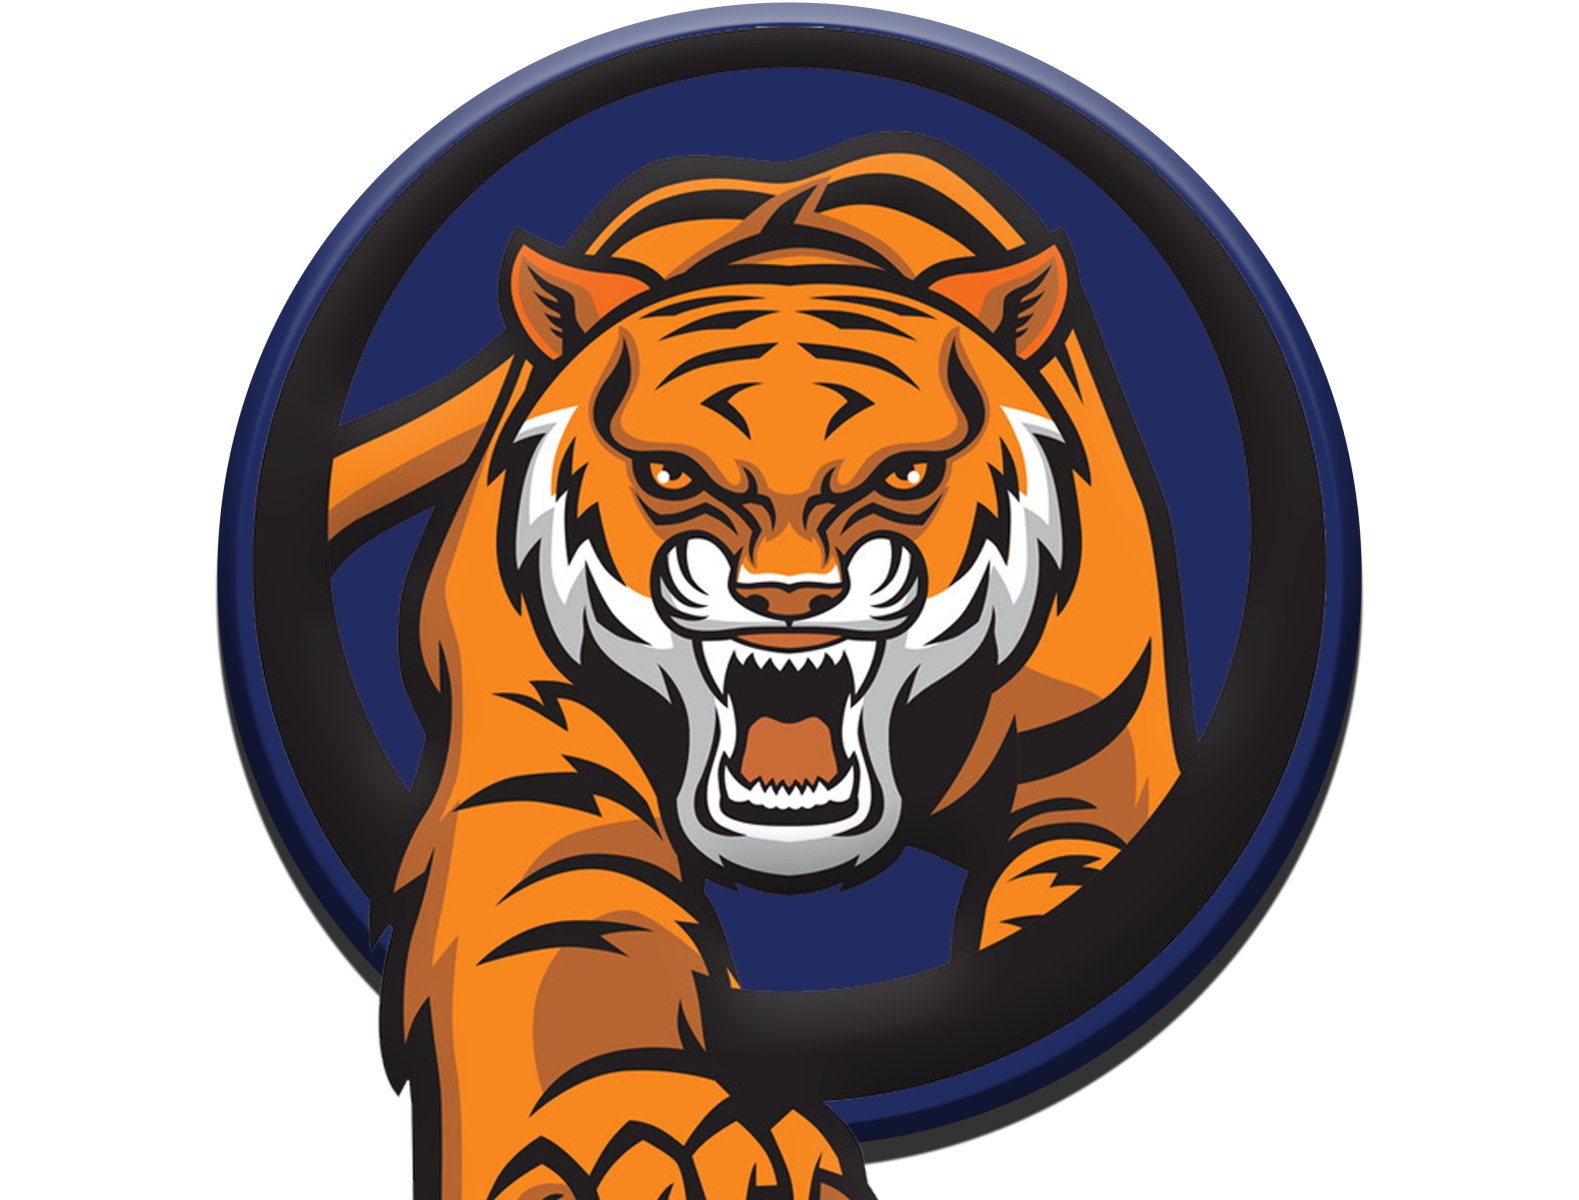 Hubli Tigers team logo by Jiga Designs on Dribbble